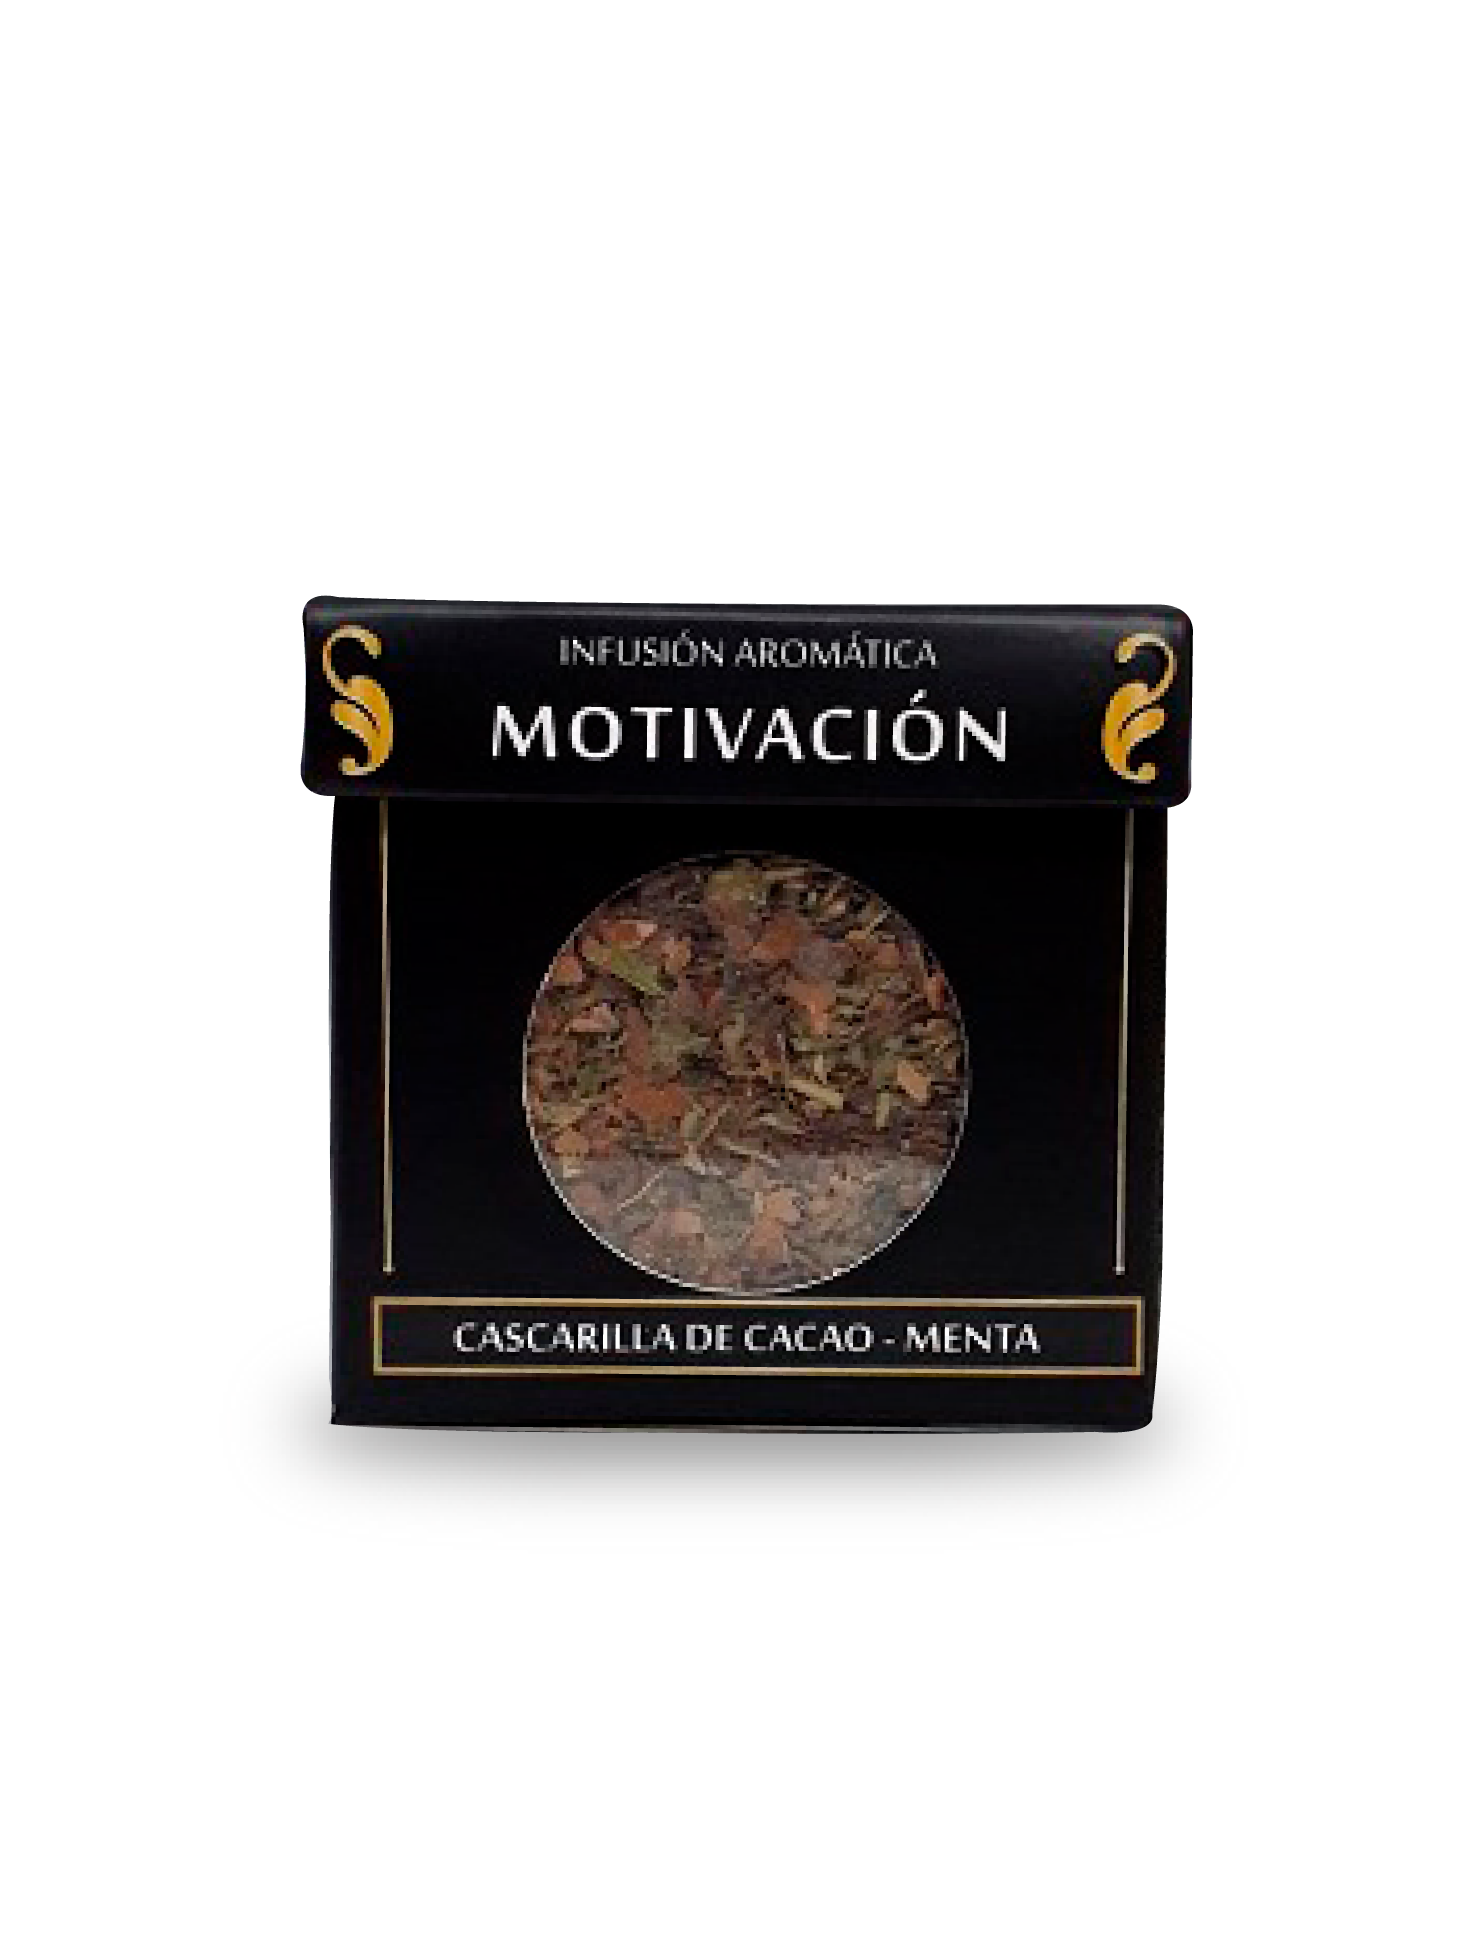 Infusion Ayurvedica Motivacion x 40 gr (cascarilla de cacao, menta)